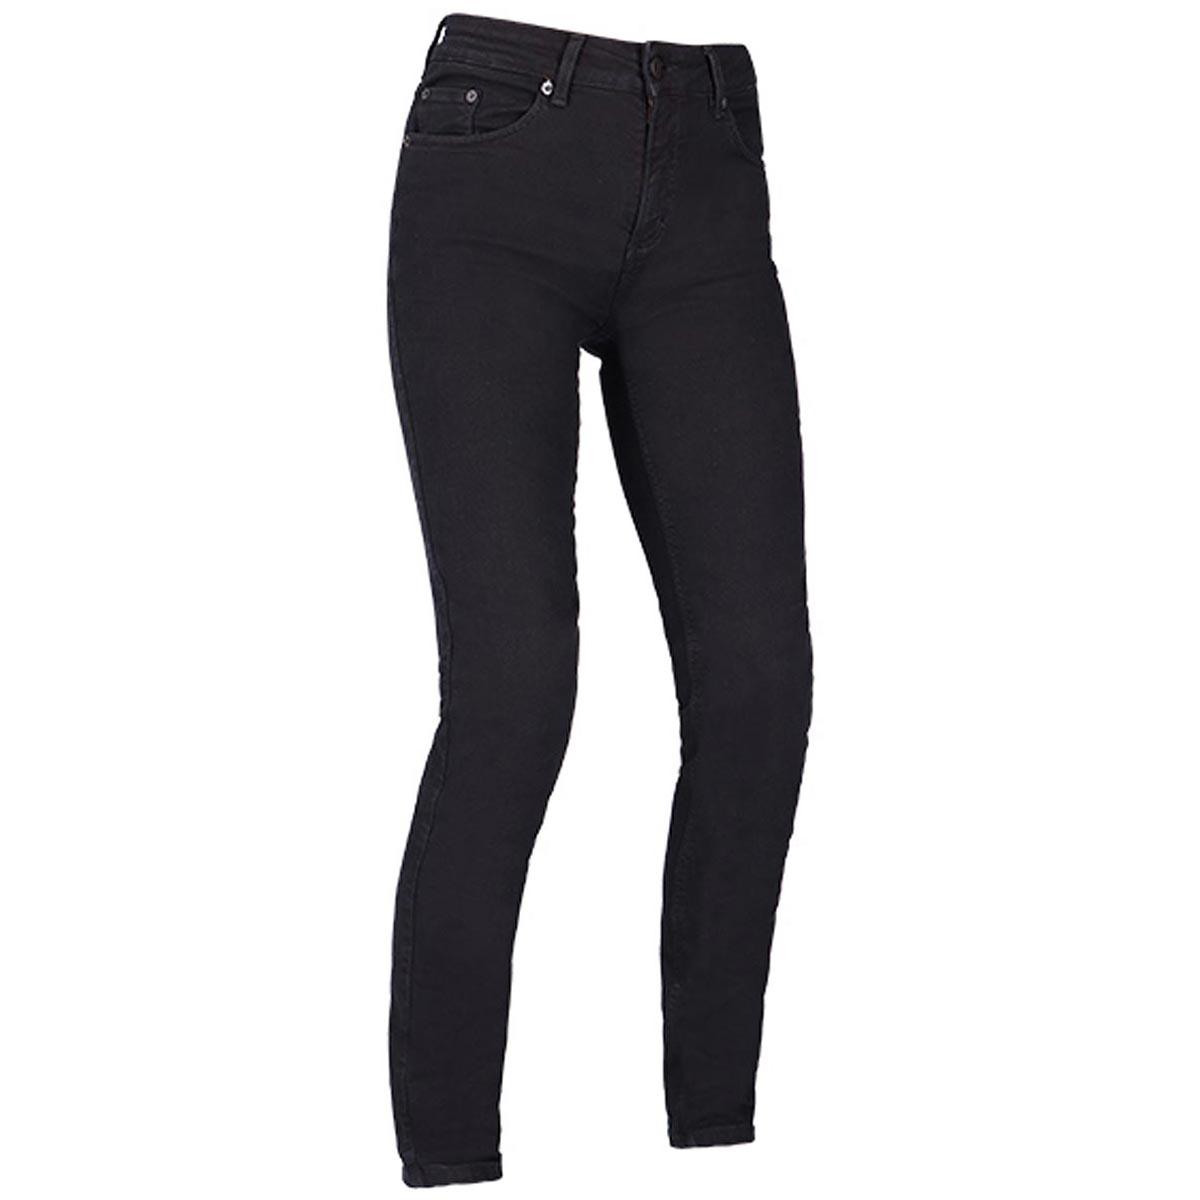 Richa Original 2 Slim Cut Jeans Ladies Black 30in Leg 44in Waist